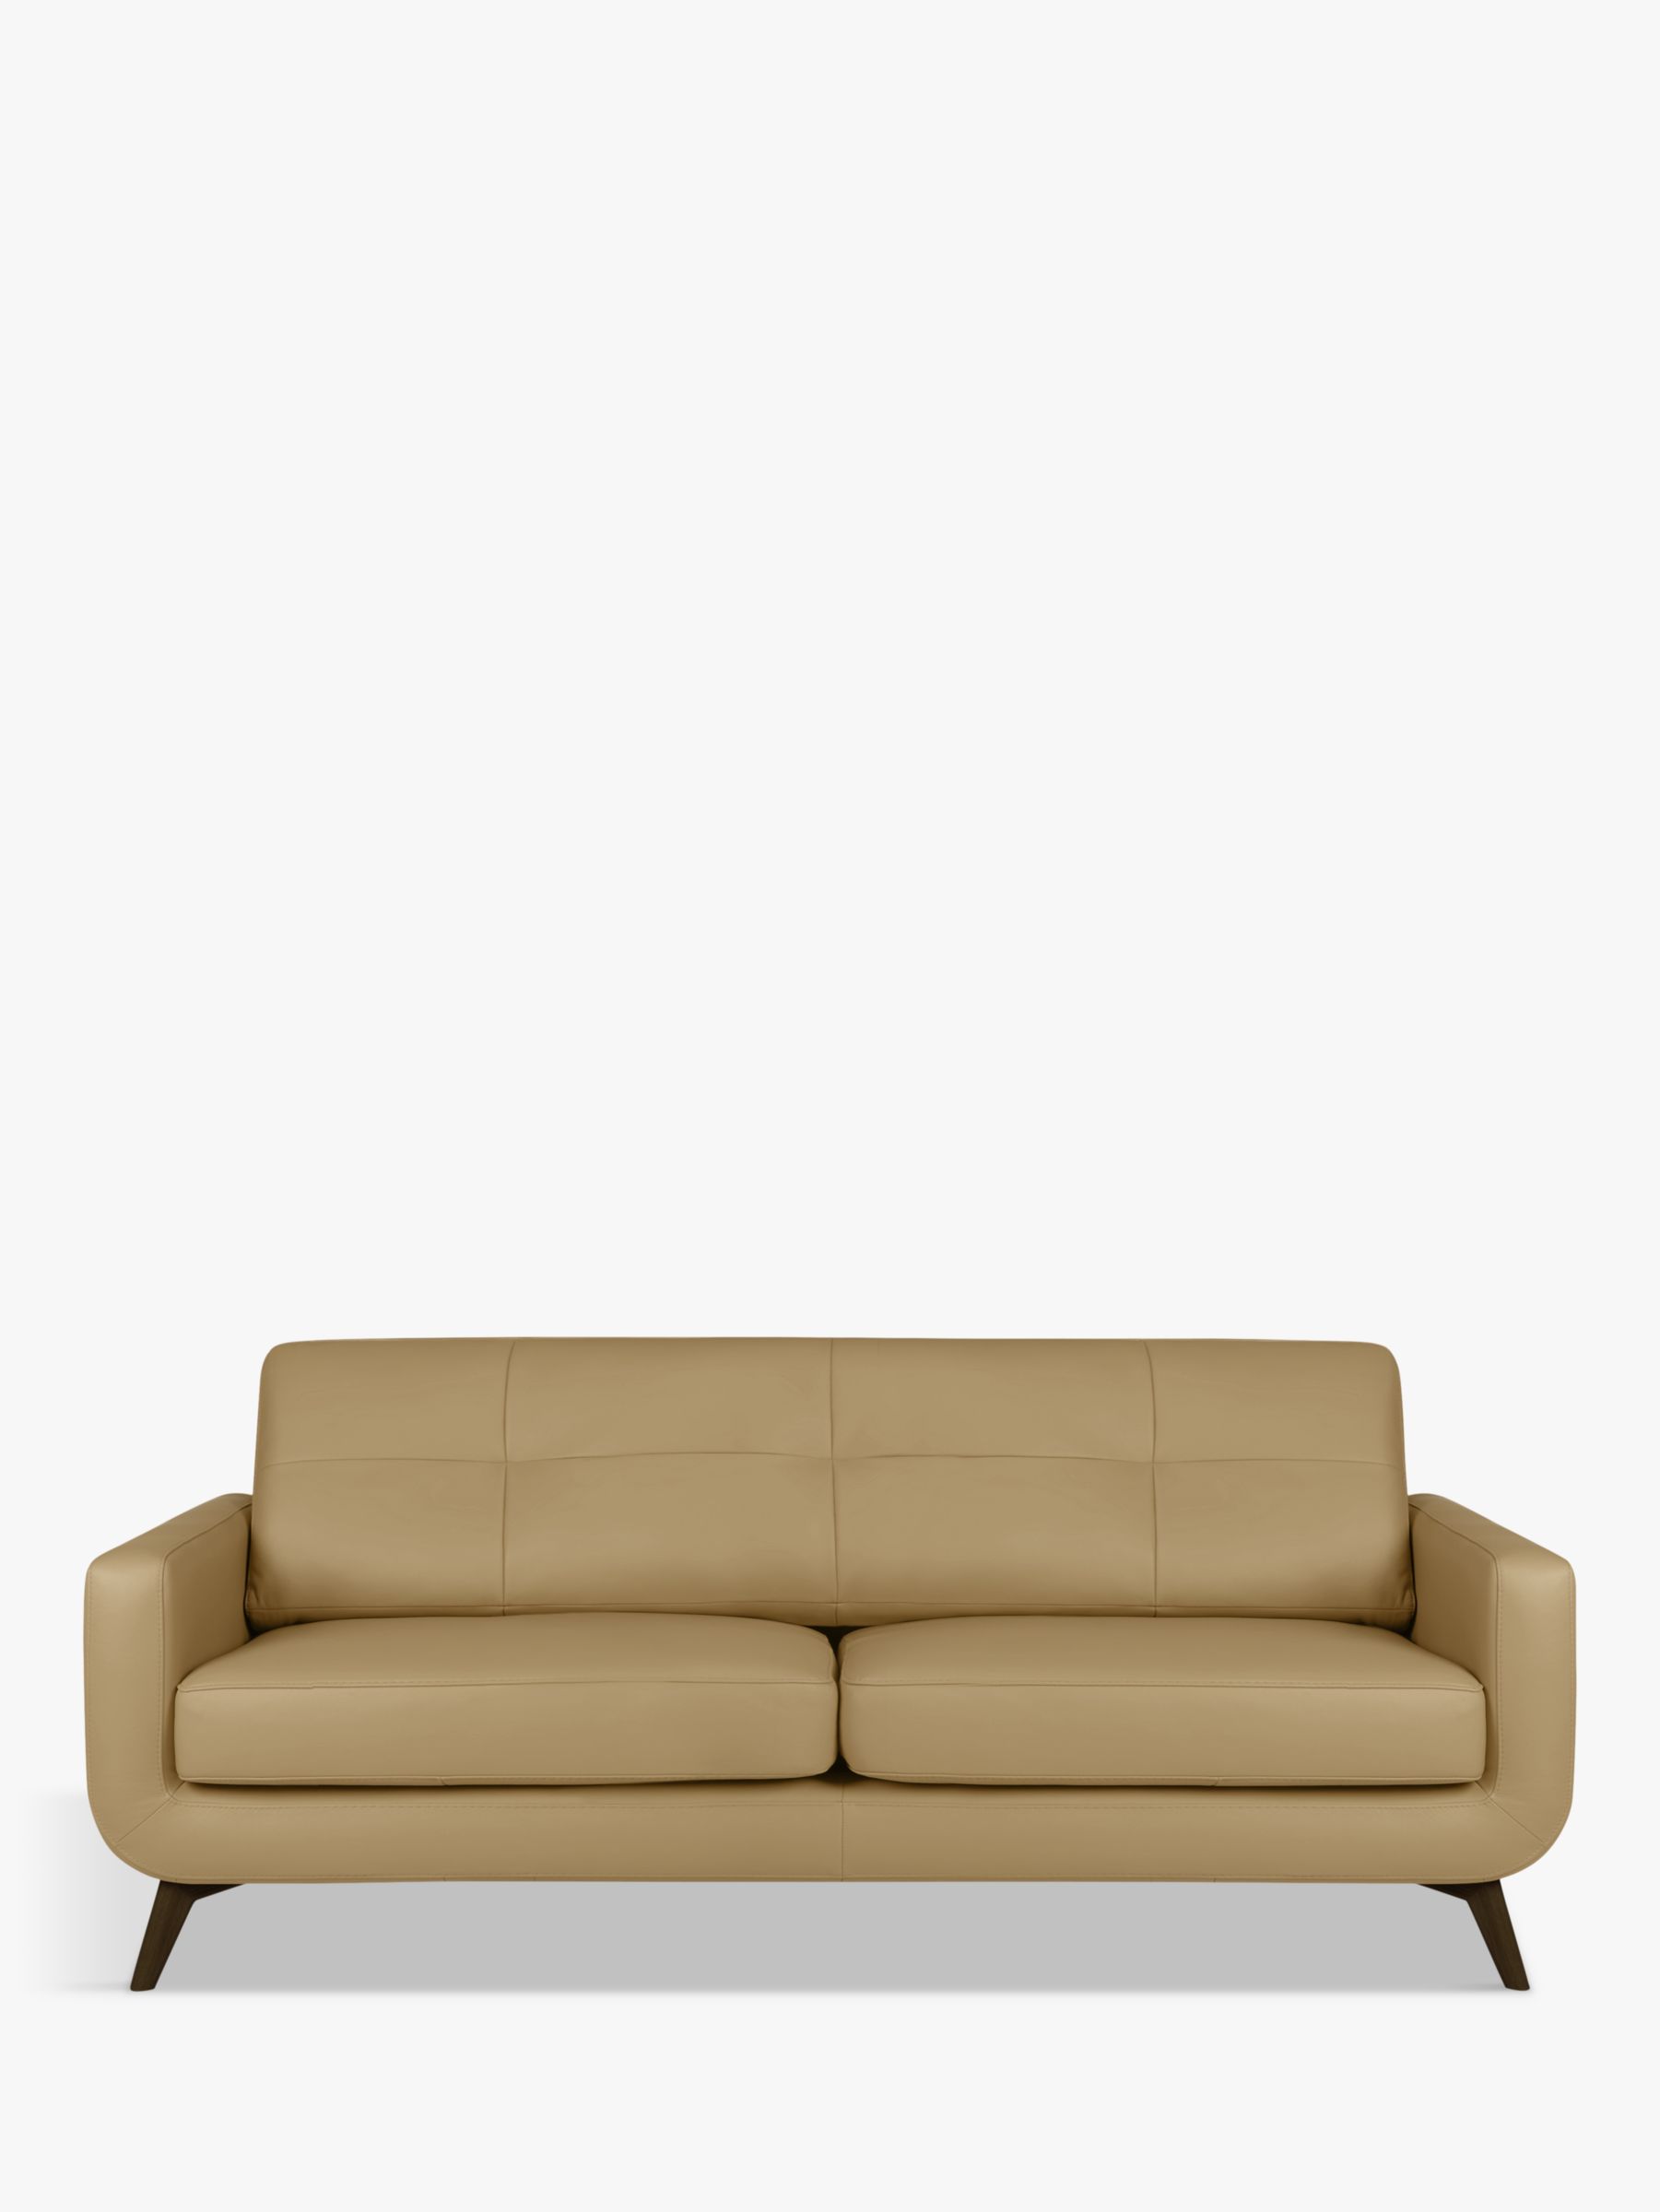 Barbican Range, John Lewis Barbican Large 3 Seater Leather Sofa, Dark Leg, Sellvagio Parchment